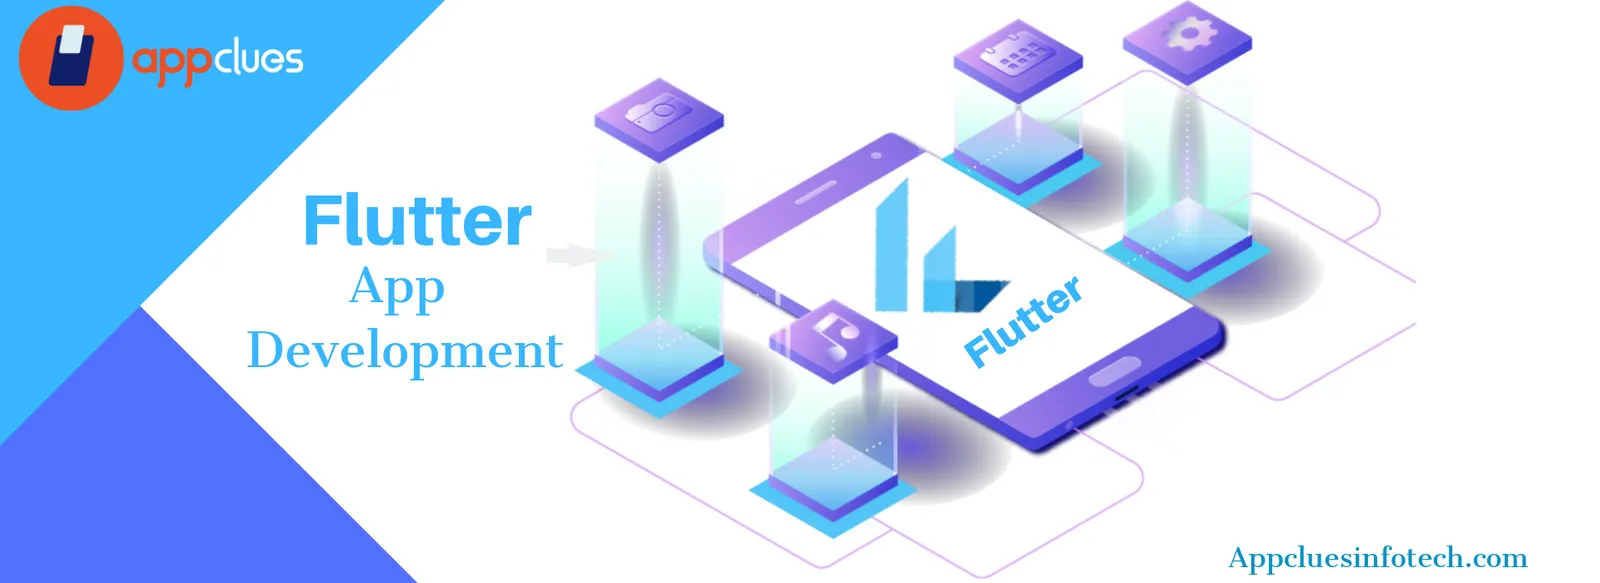 Top Flutter App Development Company in USA